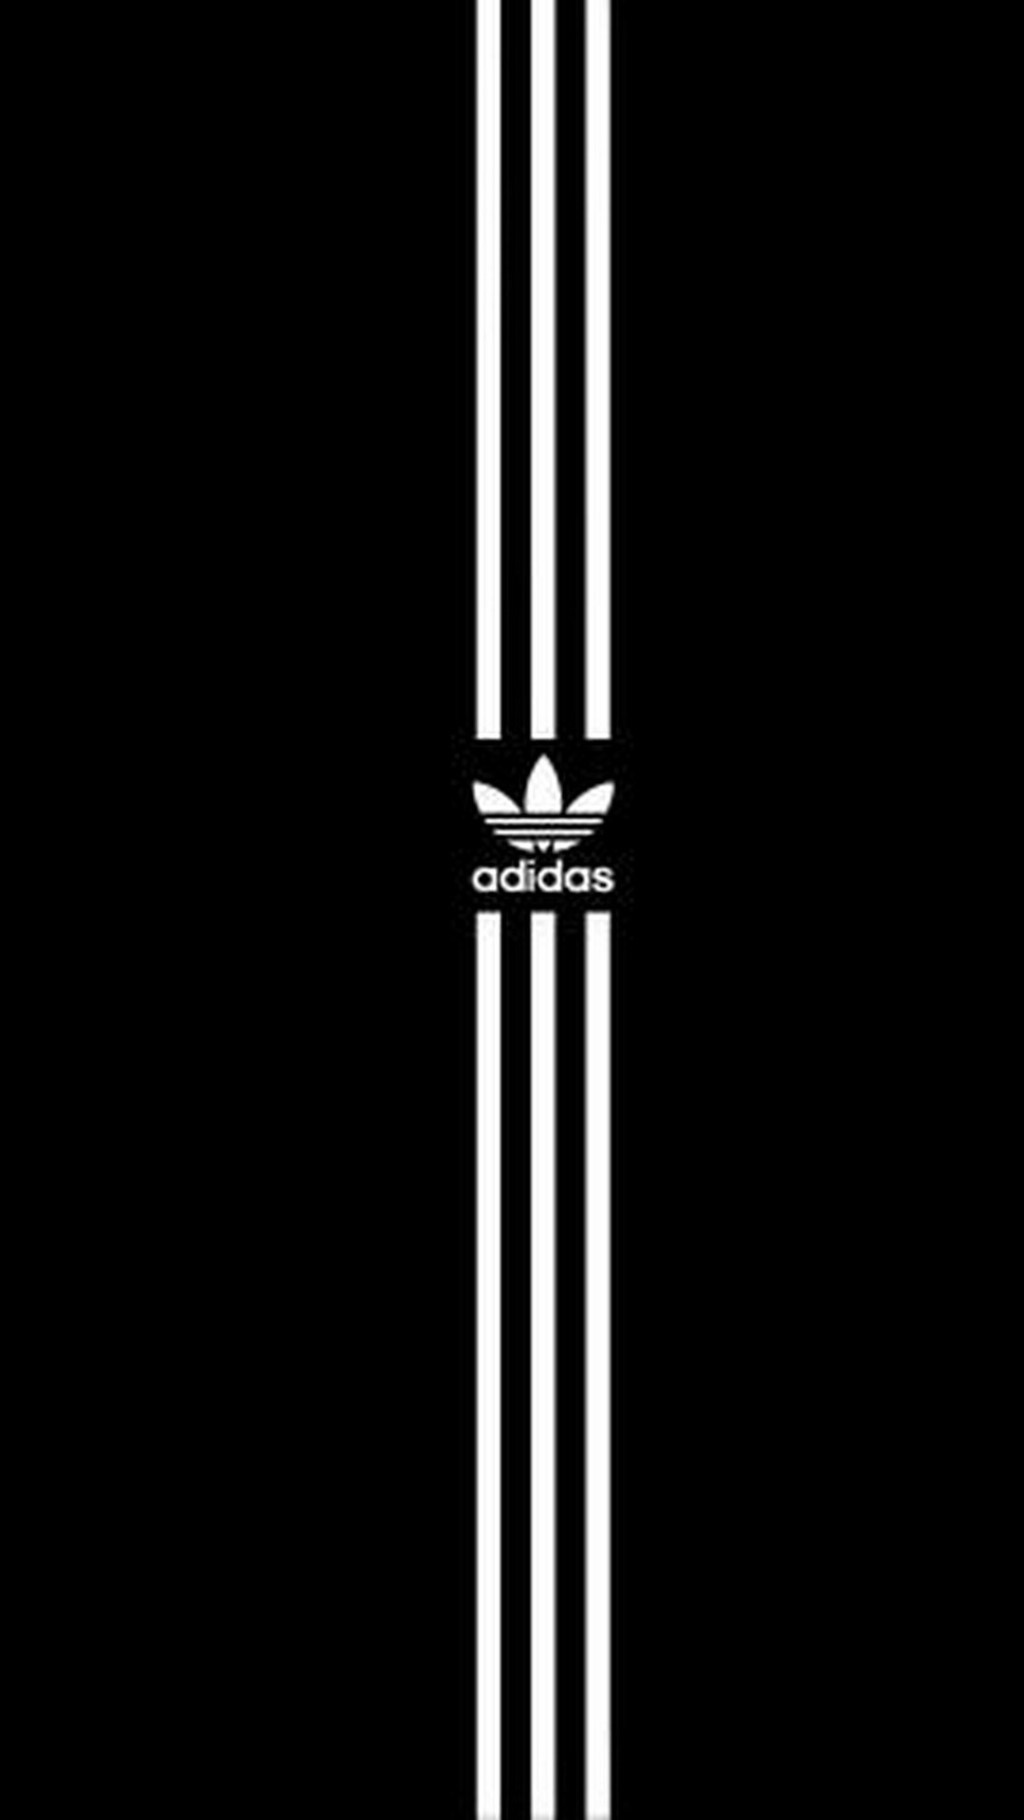 Permanecer Querido Conmemorativo 3D iPhone Wallpaper on Twitter: "Adidas Logo iPhone 8 Wallpaper  https://t.co/bG4m6DFcsH https://t.co/Eo7NIZTKCy" / Twitter